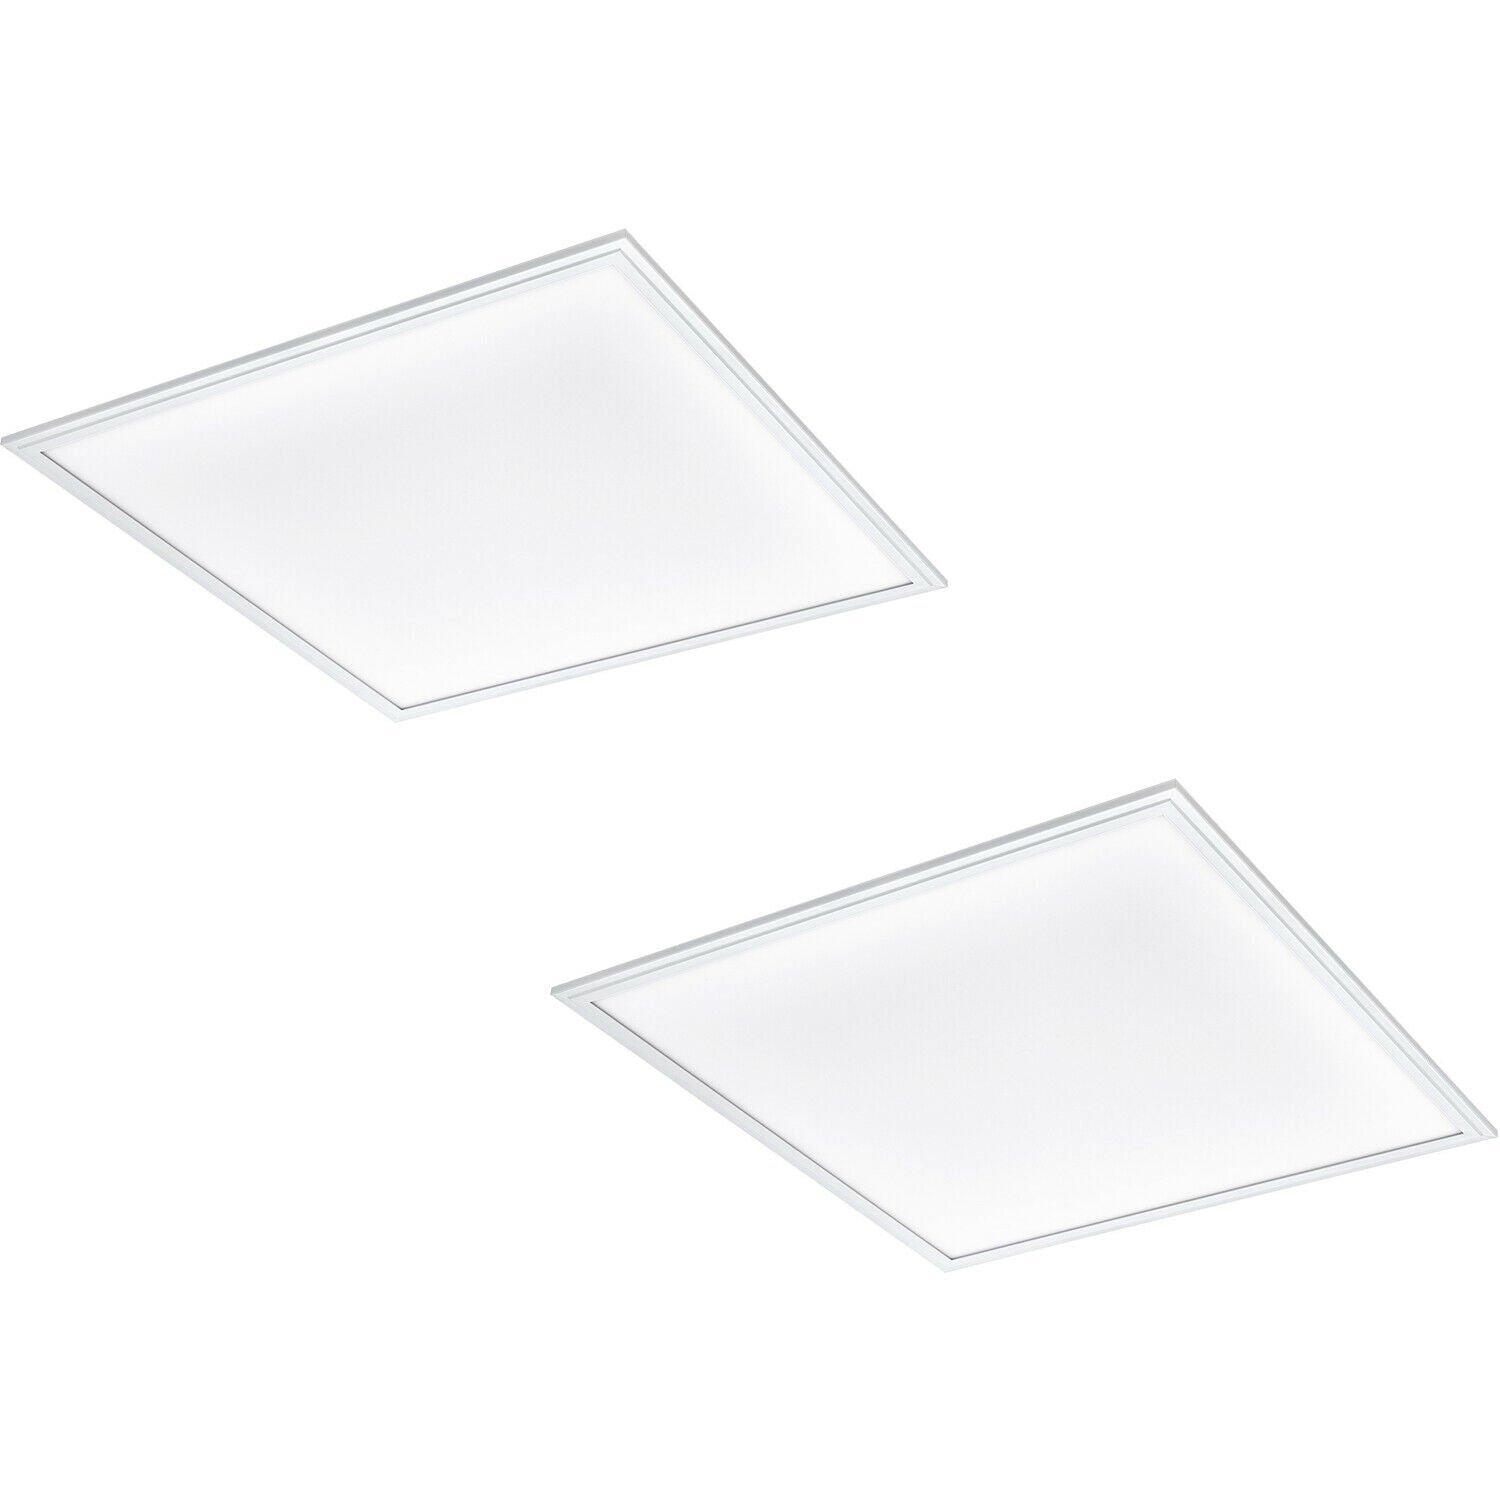 2 PACK Wall / Ceiling Light White Aluminium 595mm Square Panel 40W LED 4000K